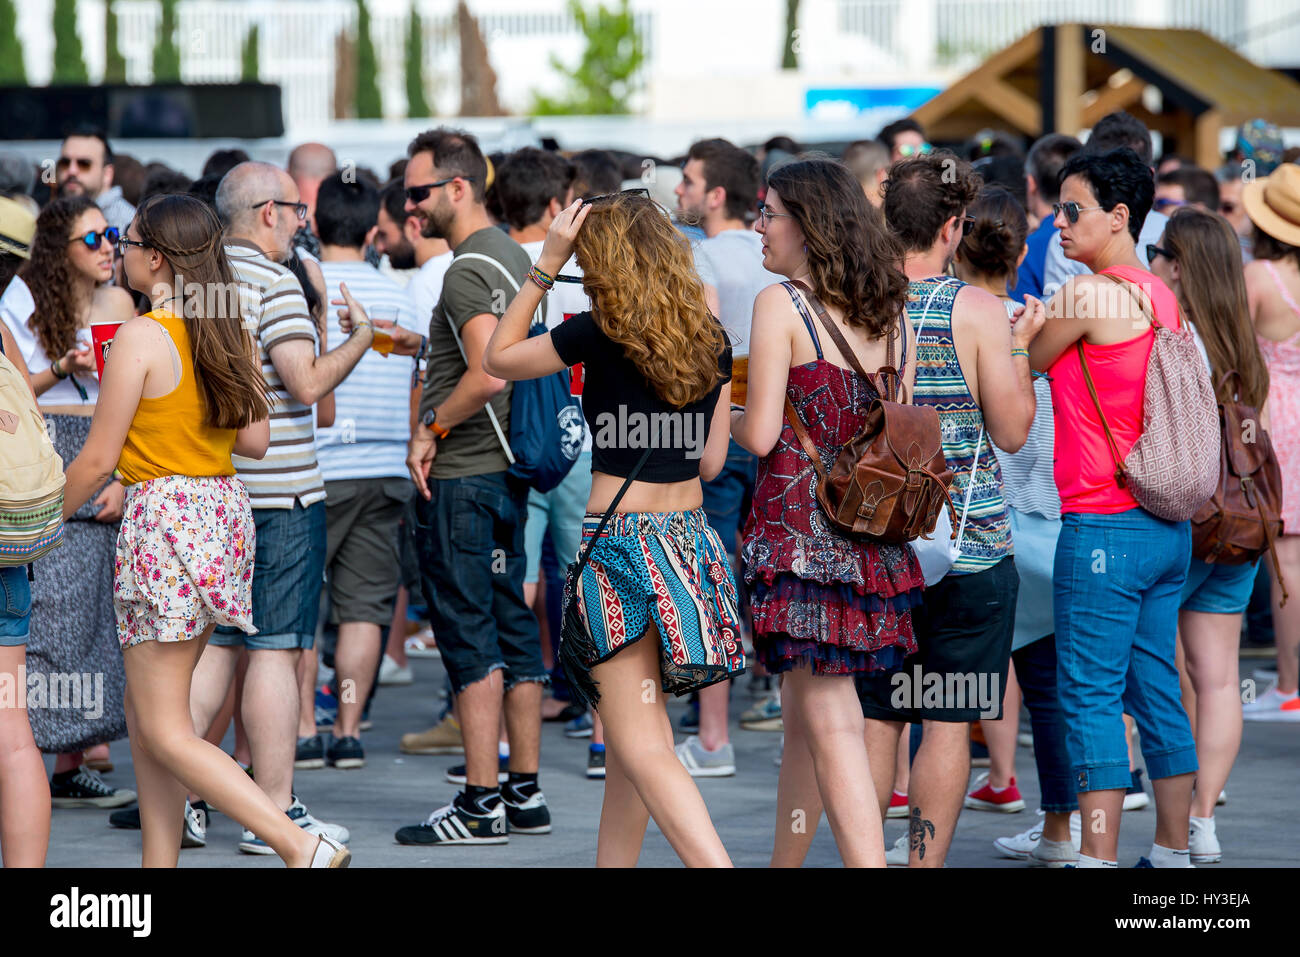 VALENCIA, Spanien - JUN 10: Menschen am Festival de Les Arts am 10. Juni 2016 in Valencia, Spanien. Stockfoto